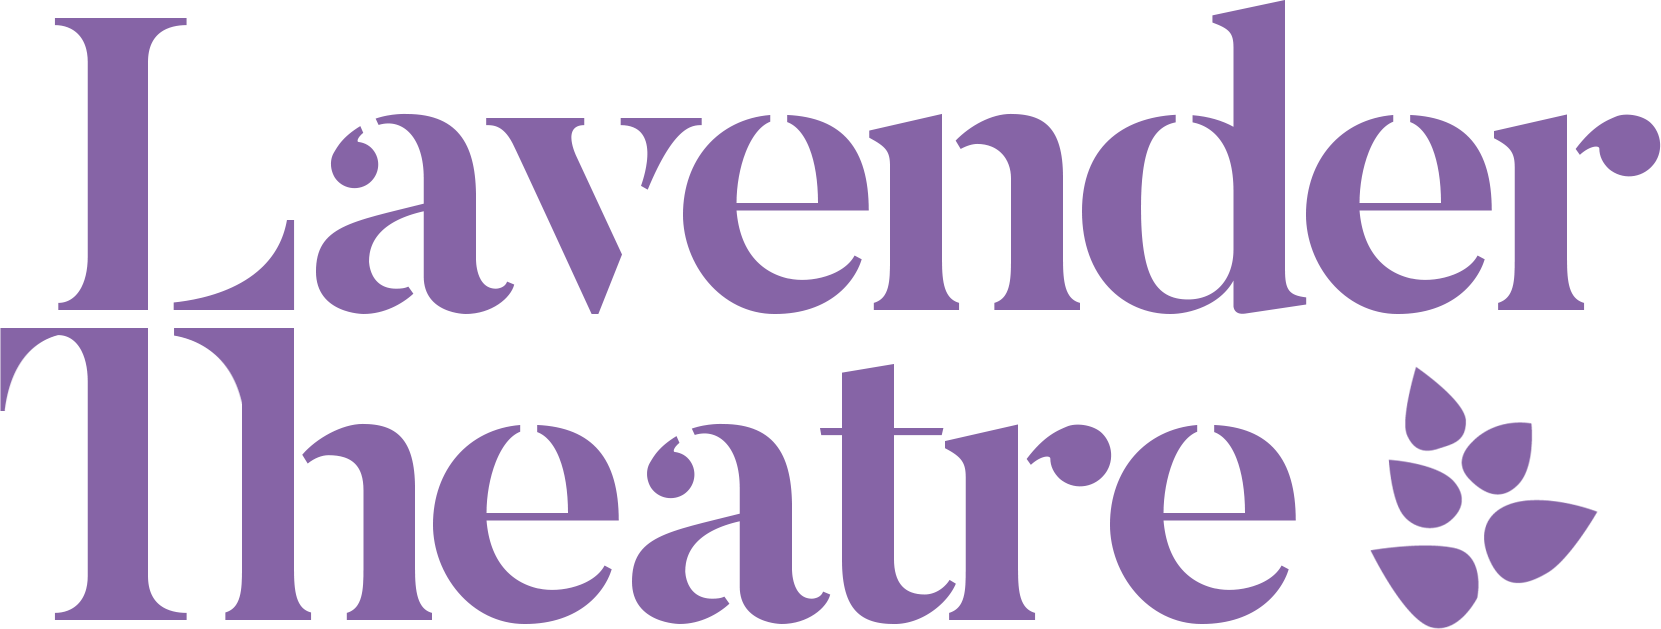 Lavender Theatre